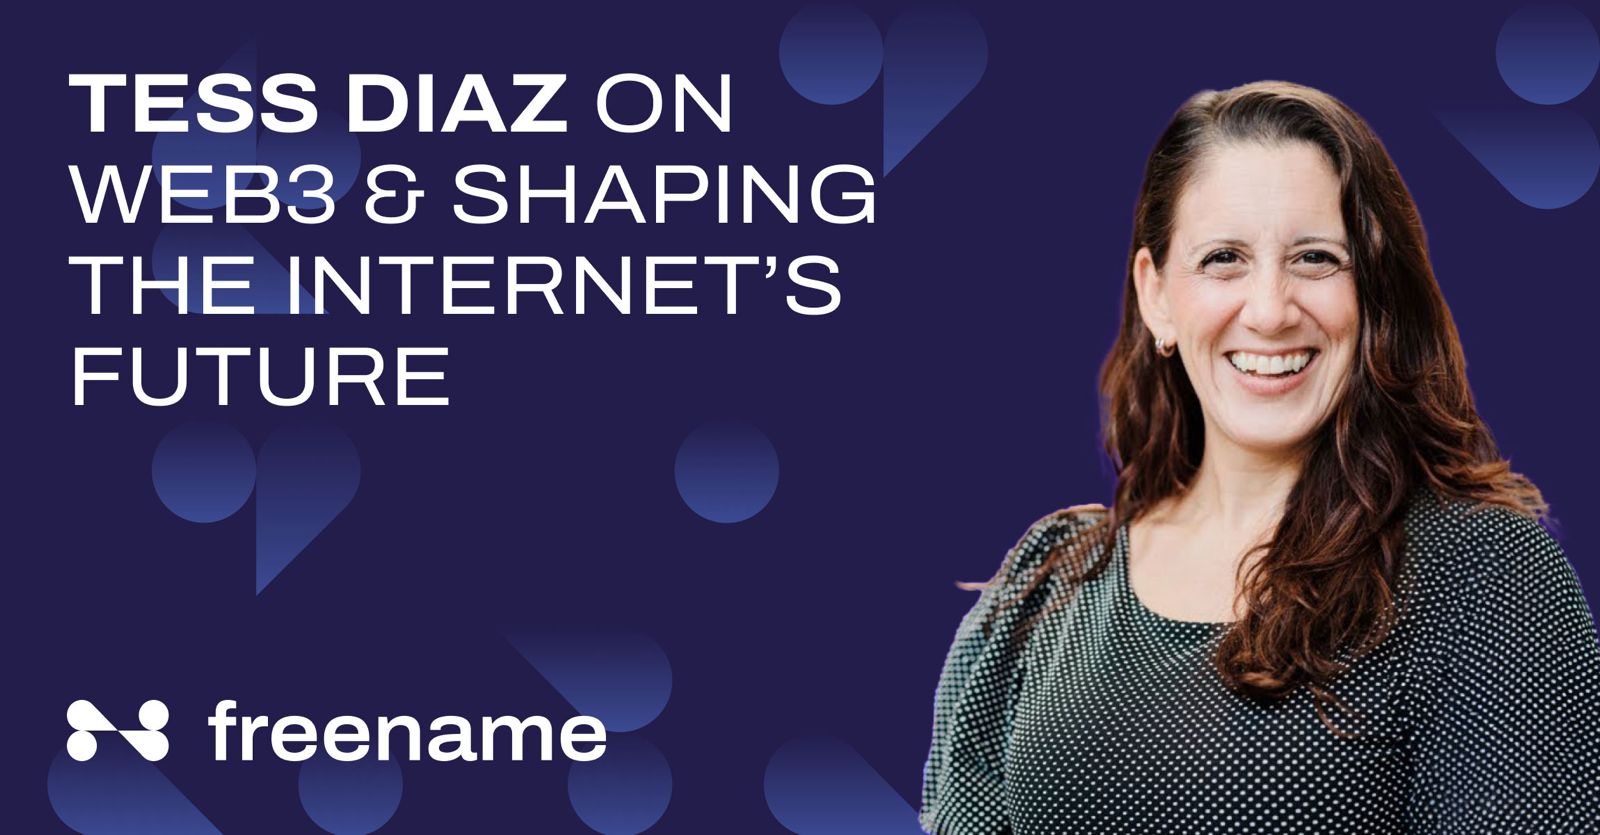 Tess Diaz on Web3 & Shaping the Internet's Future